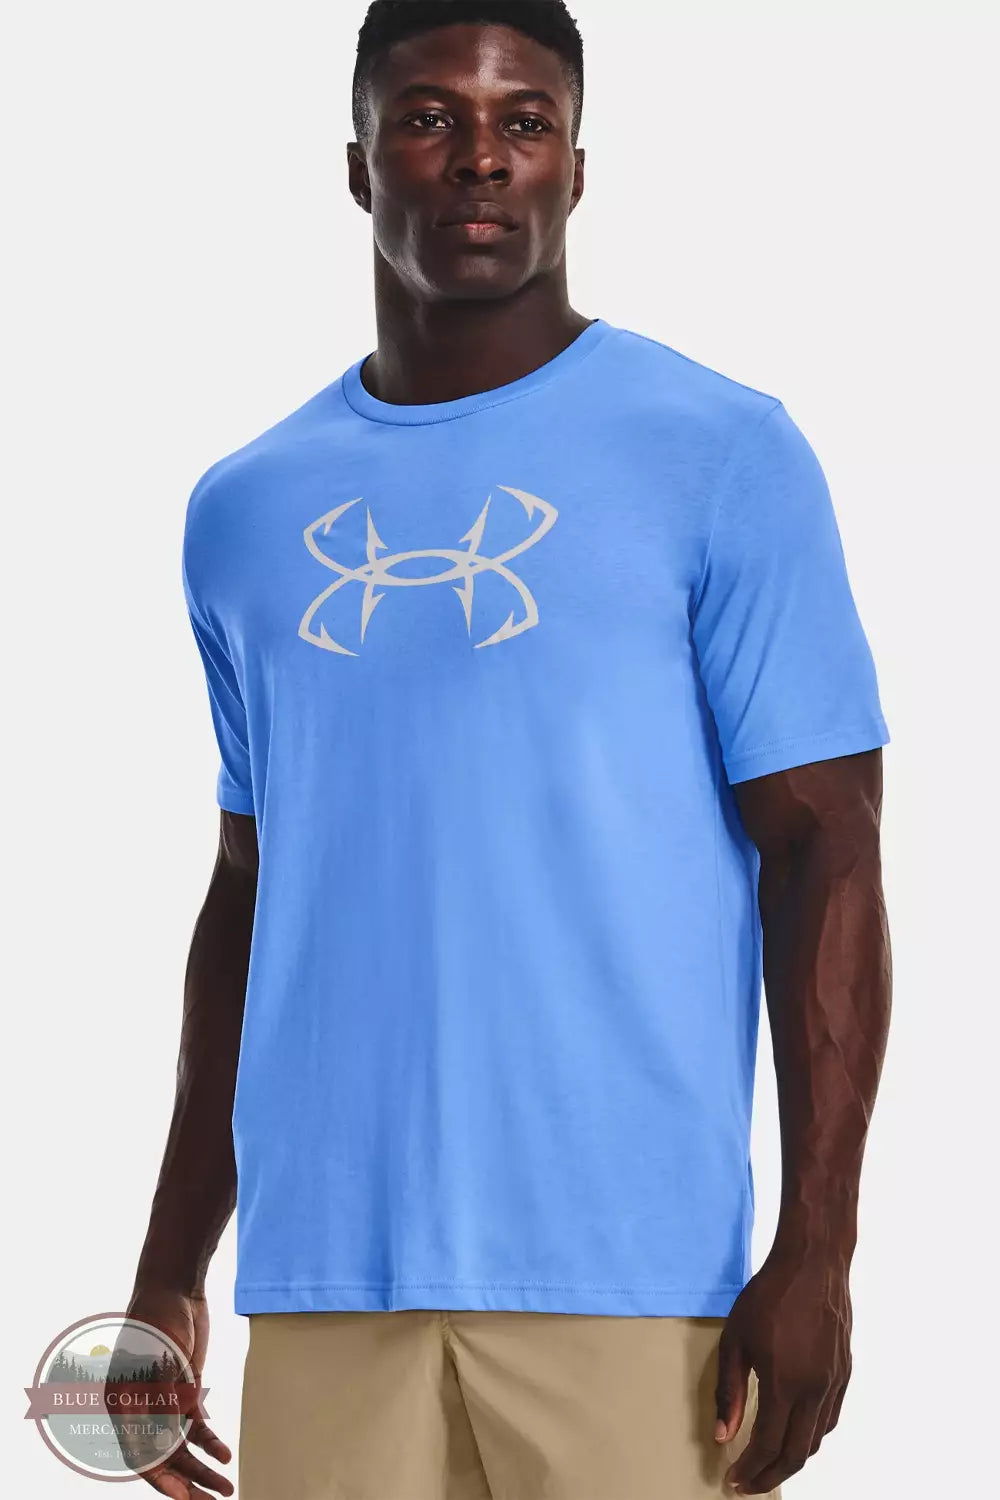 Under Armour 1331197 Fish Hook Logo Short Sleeve T-Shirt Carolina Blue Front View